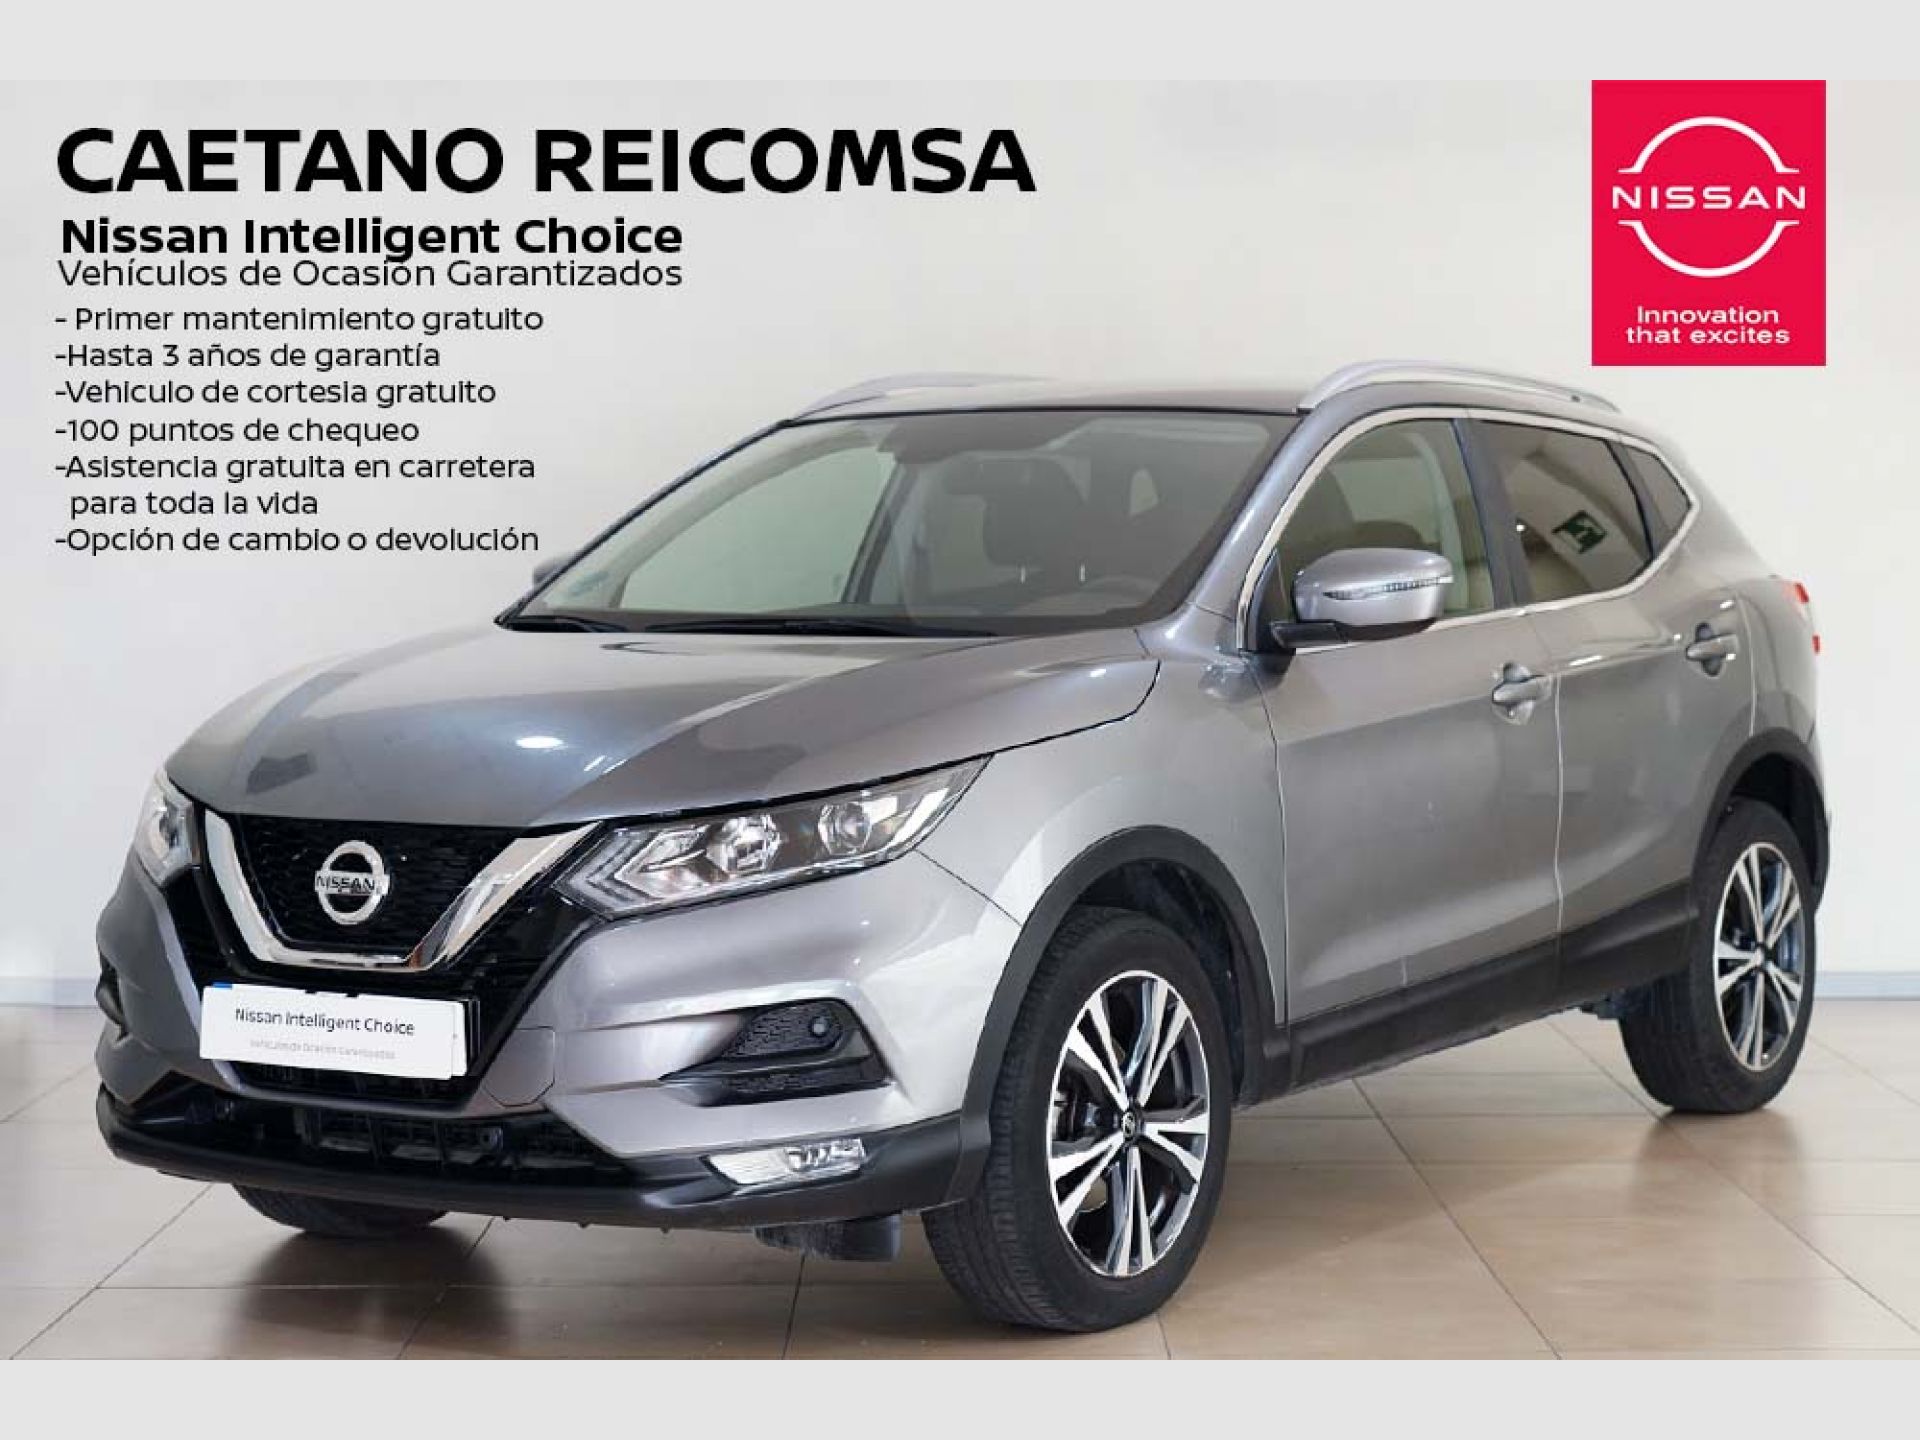 Nissan Qashqai DIG-T (140 CV) ACENTA 2019 26500 kms Gris (metalizado) segunda mano Madrid | Caetano Cuzco